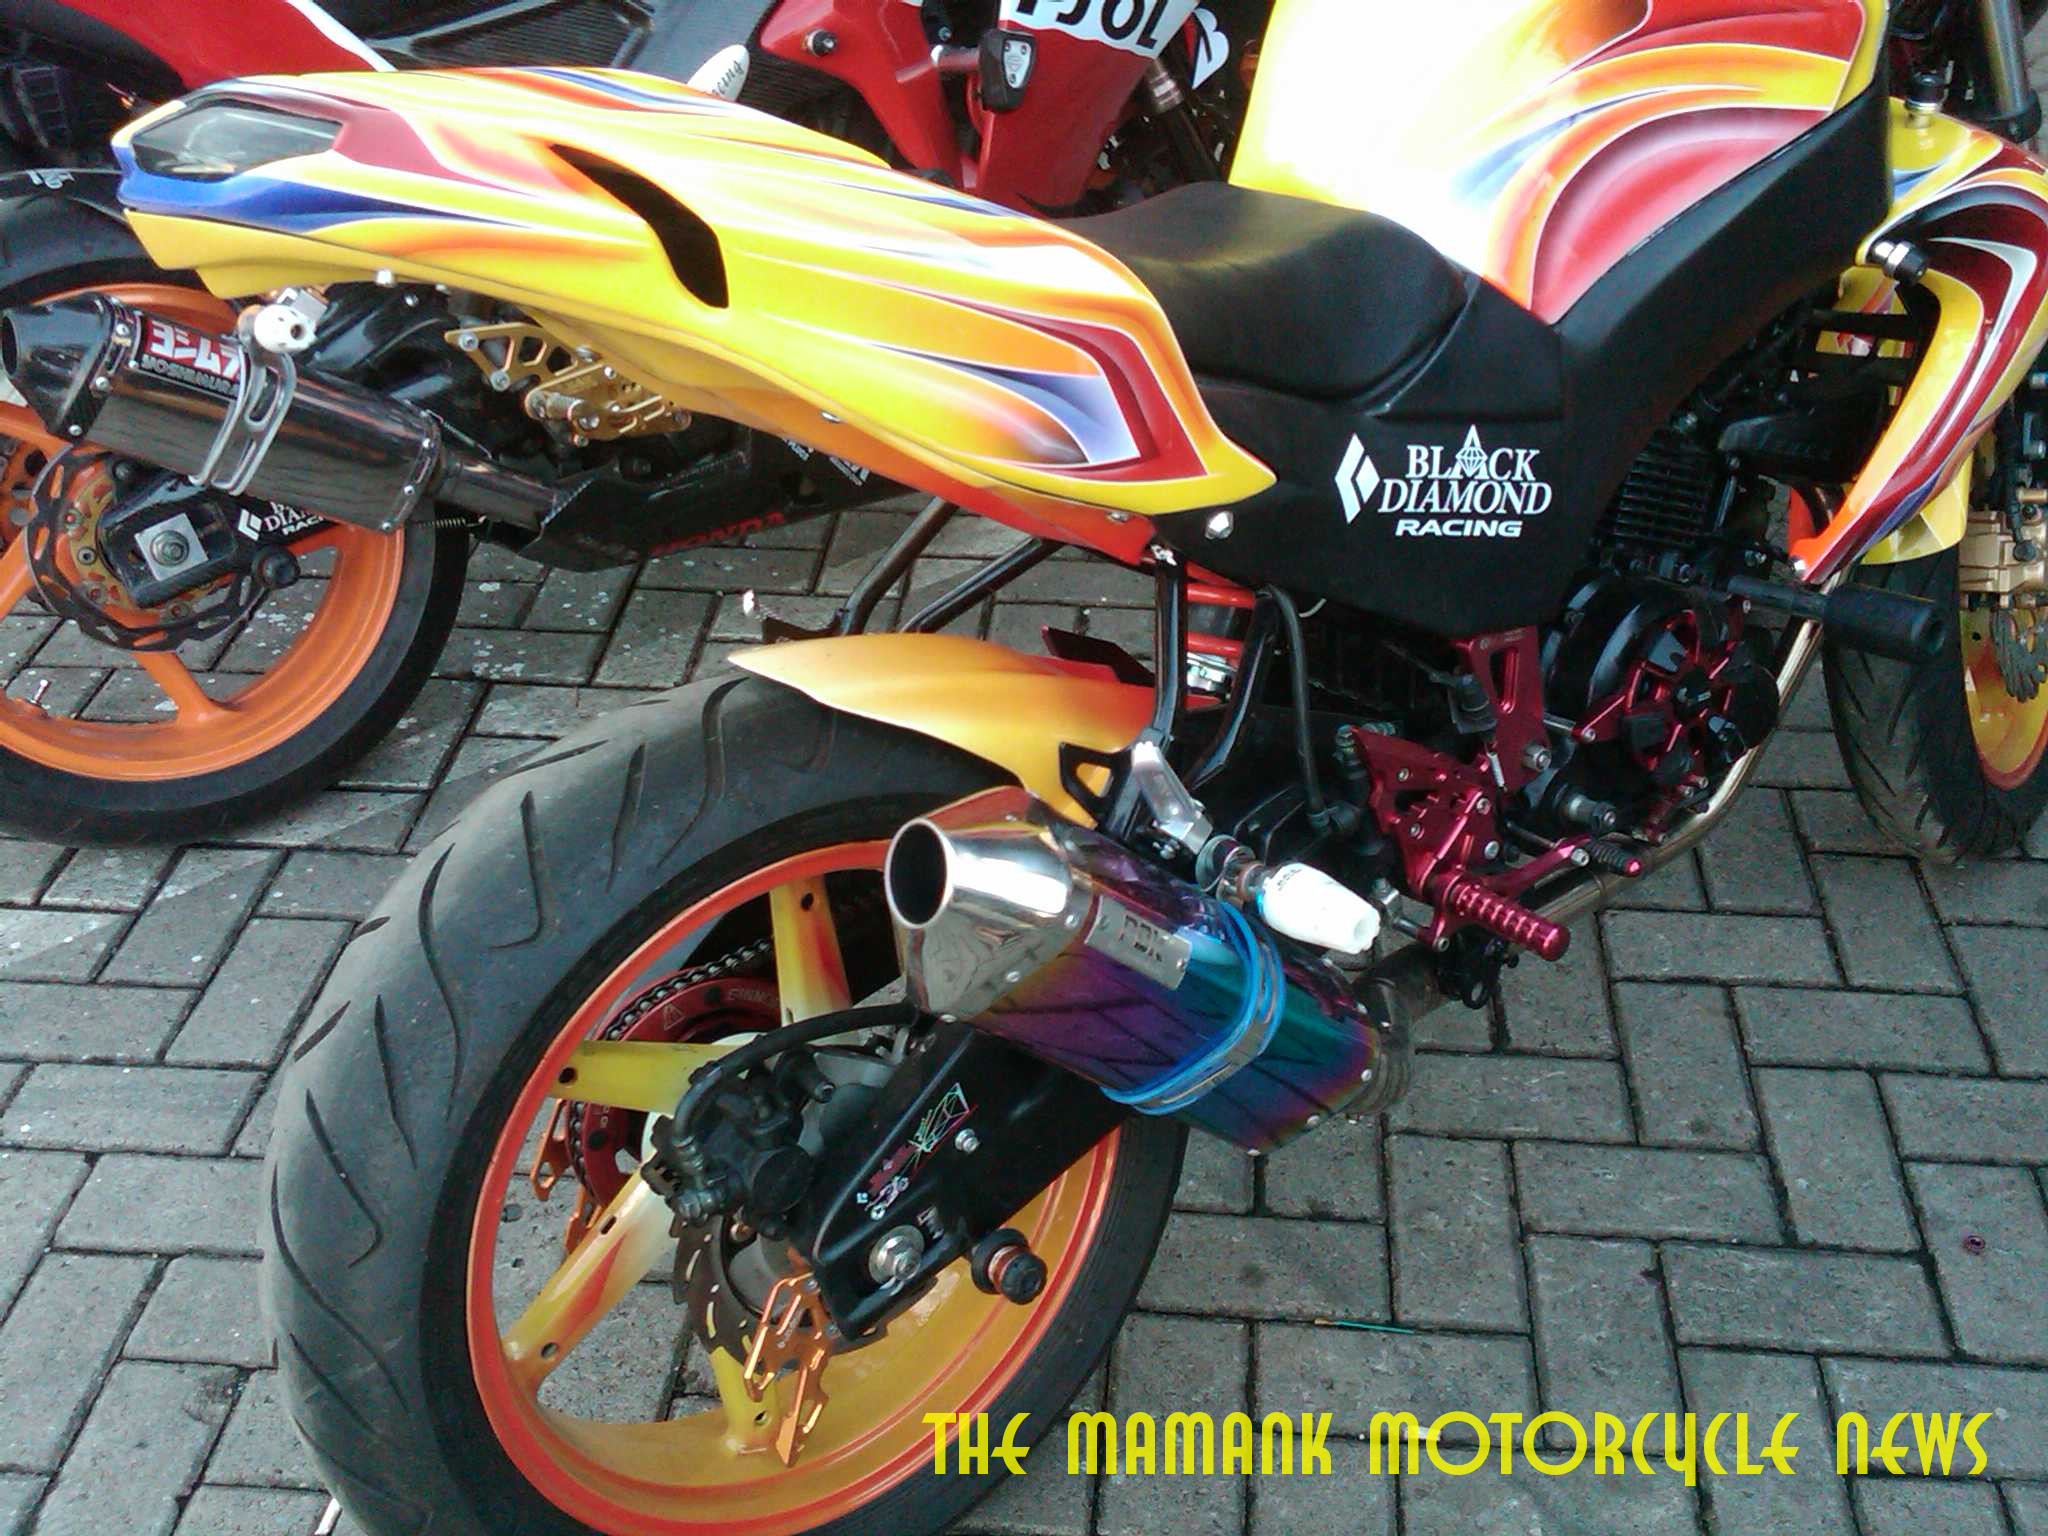 Modifikasi BYSON Rasa ER 6 Dan Ducati Streetfighter The Mamankcom